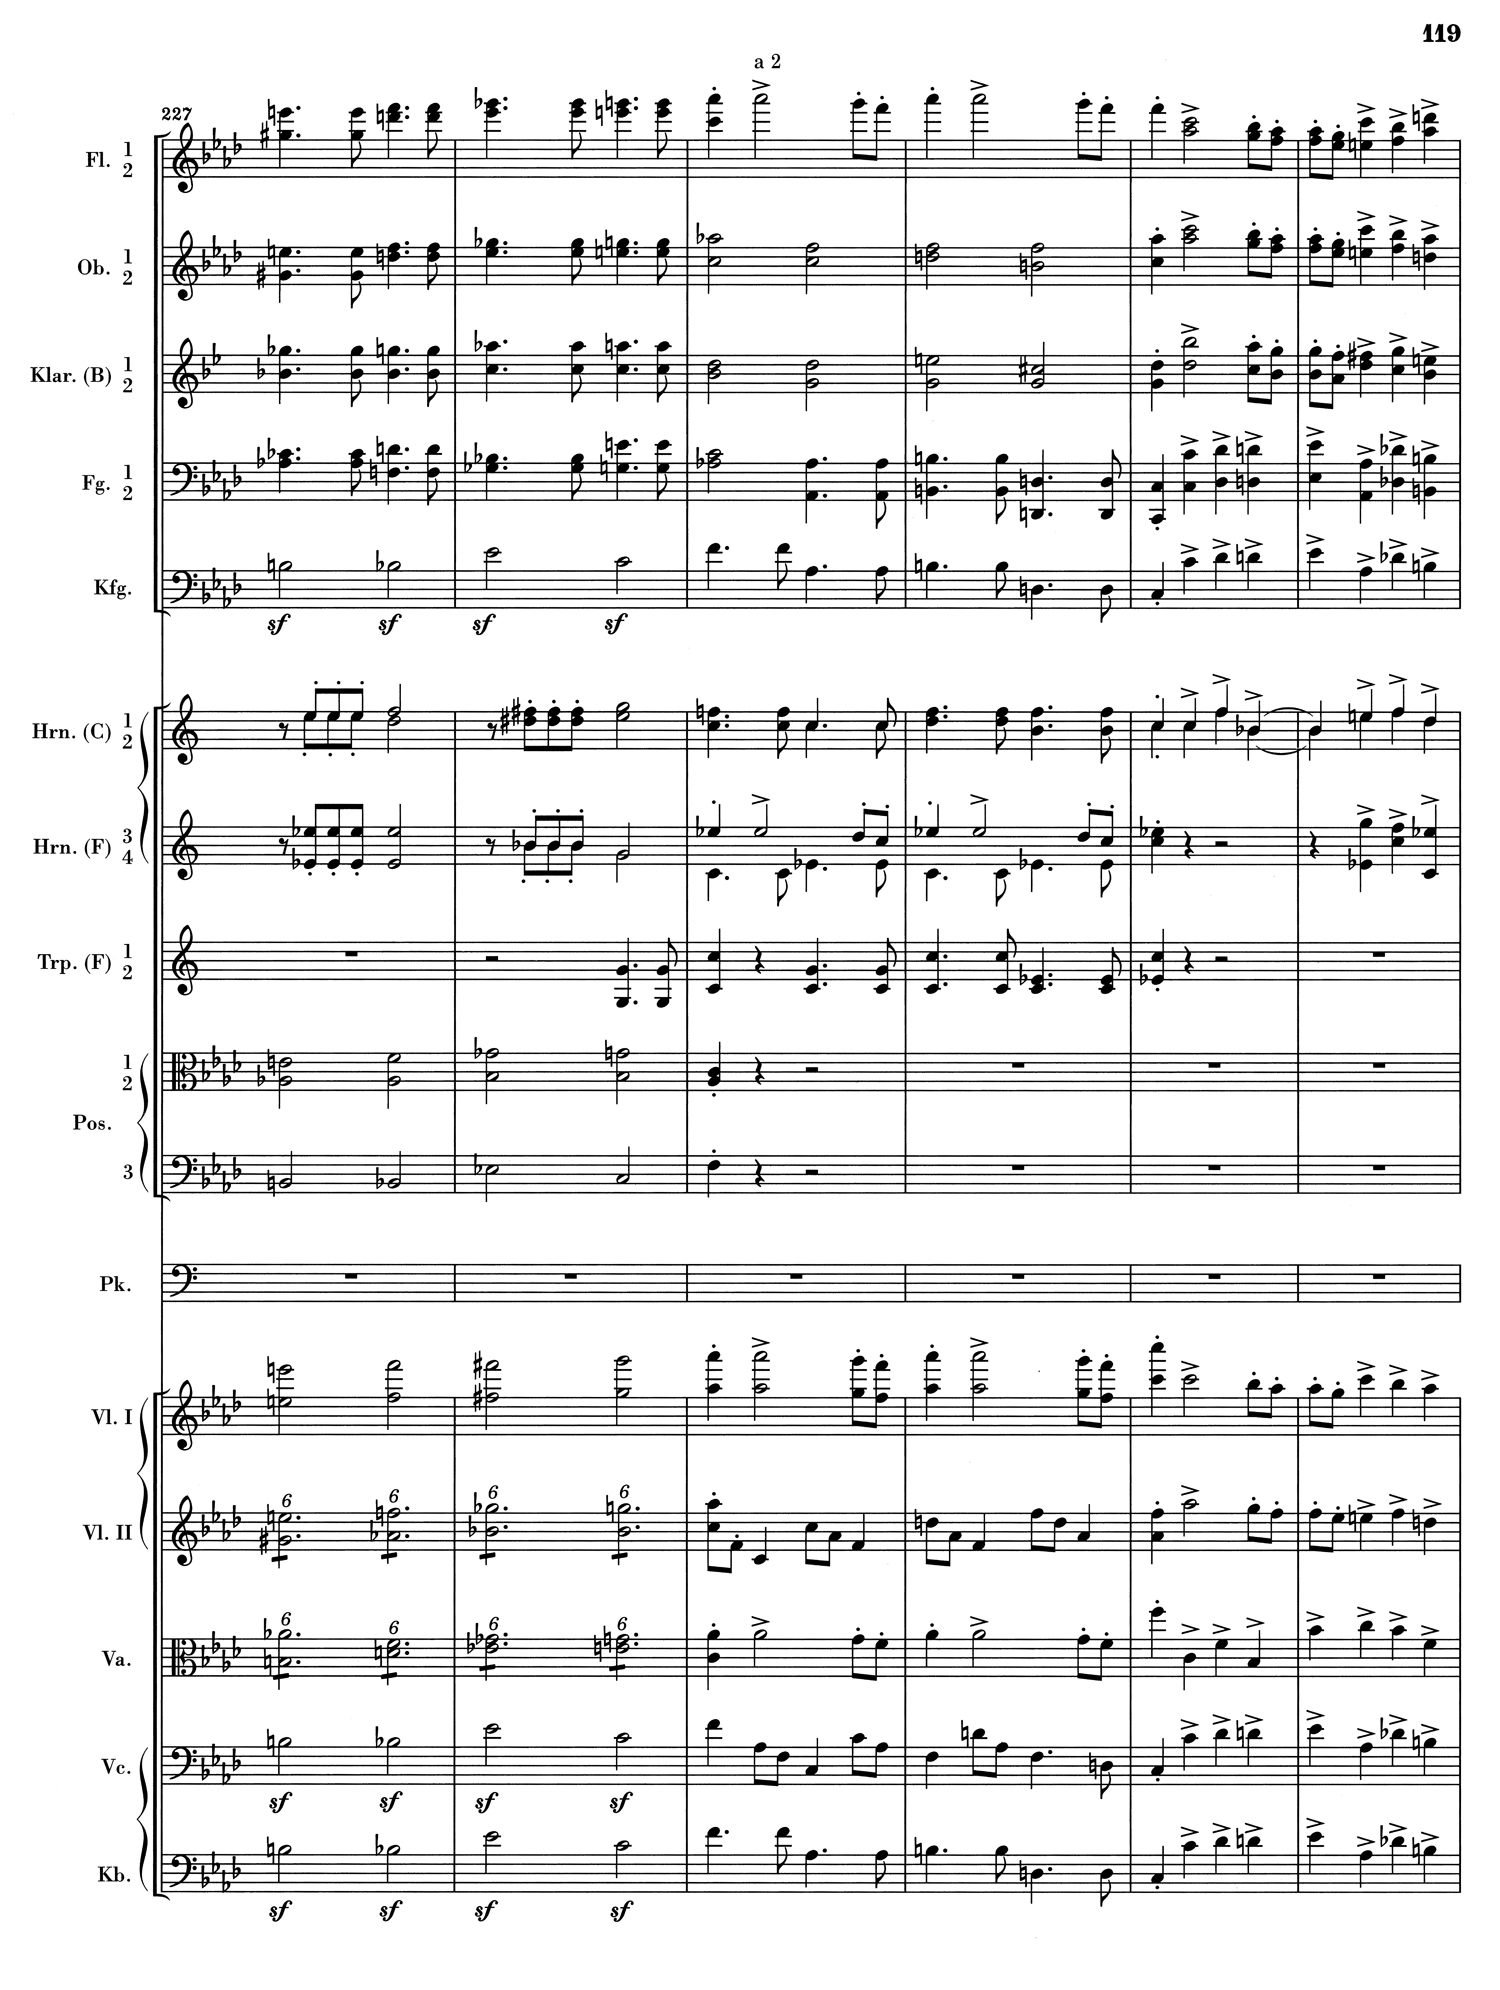 Brahms 3 Score 12.jpg